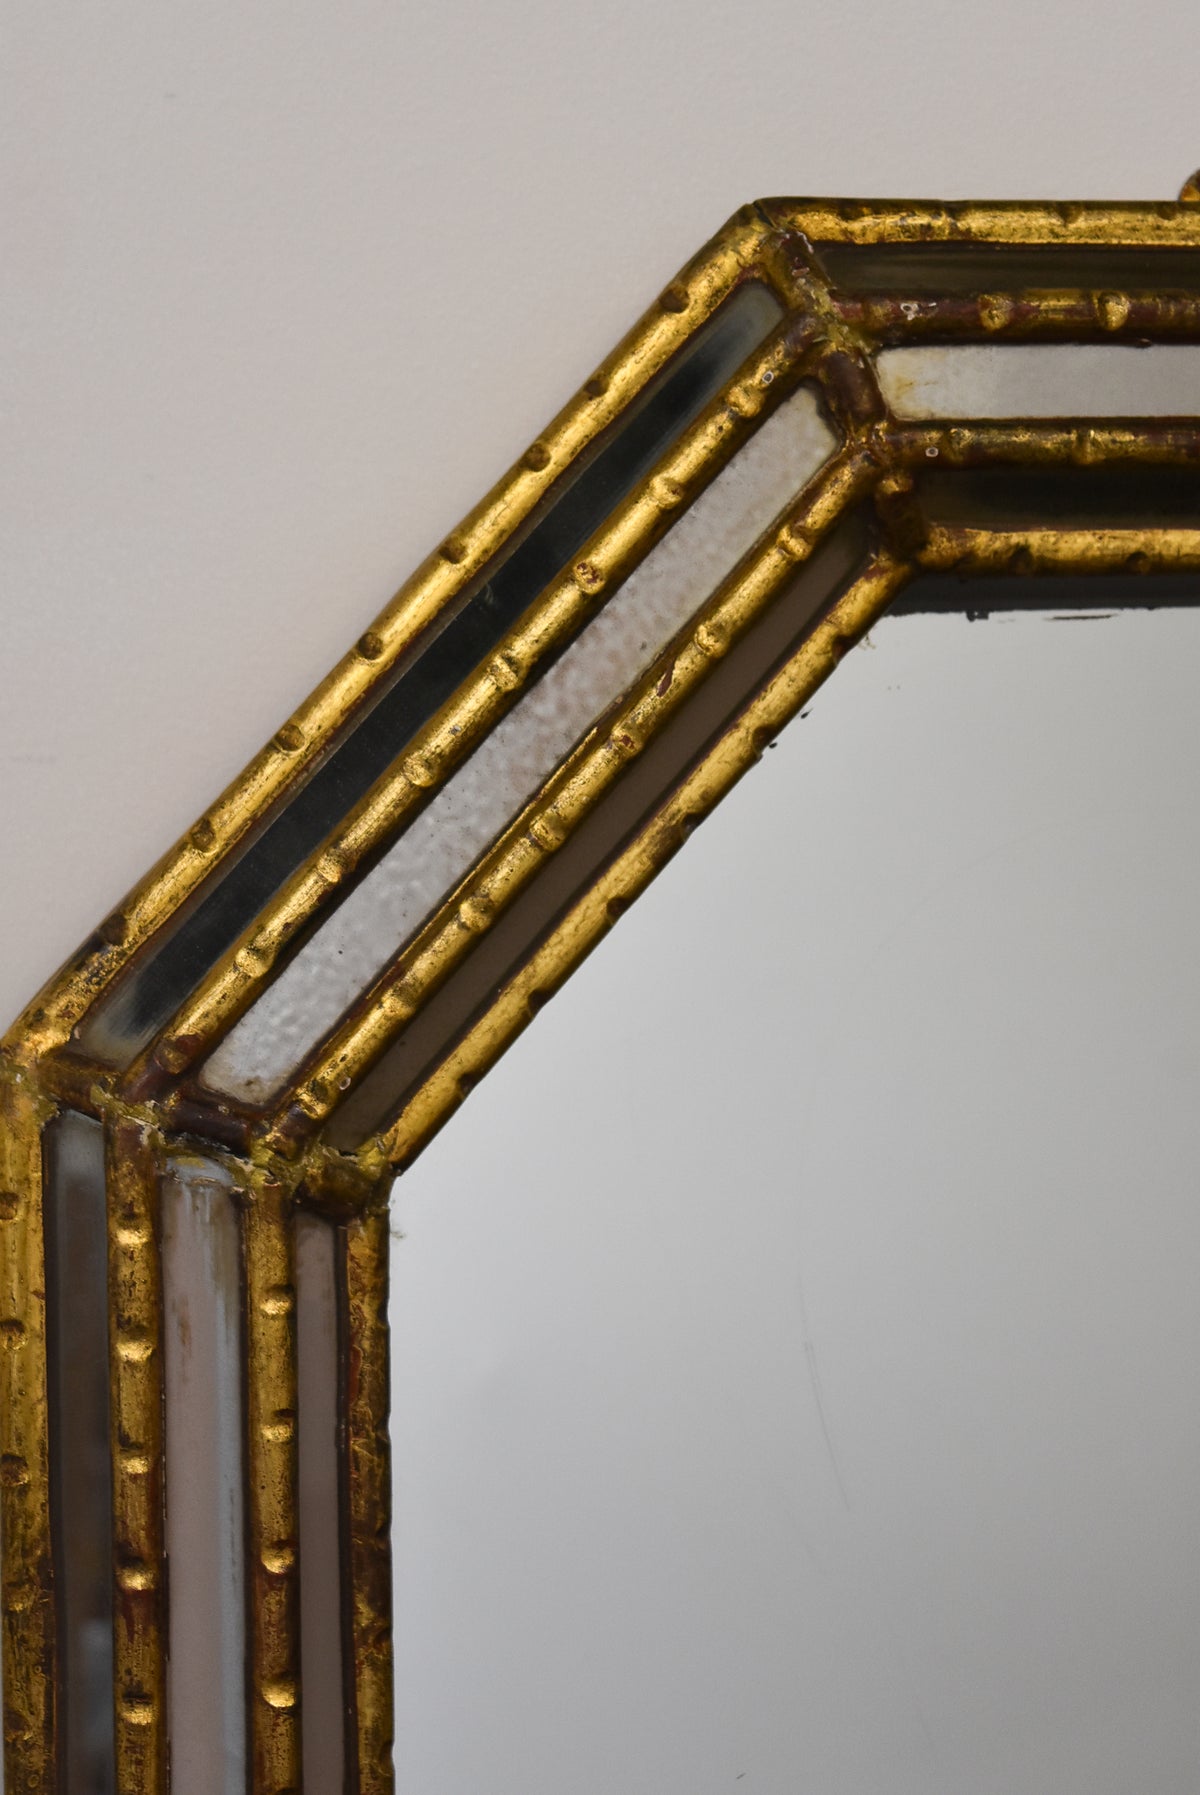 Hexagonal Vintage French Bamboo Mirror